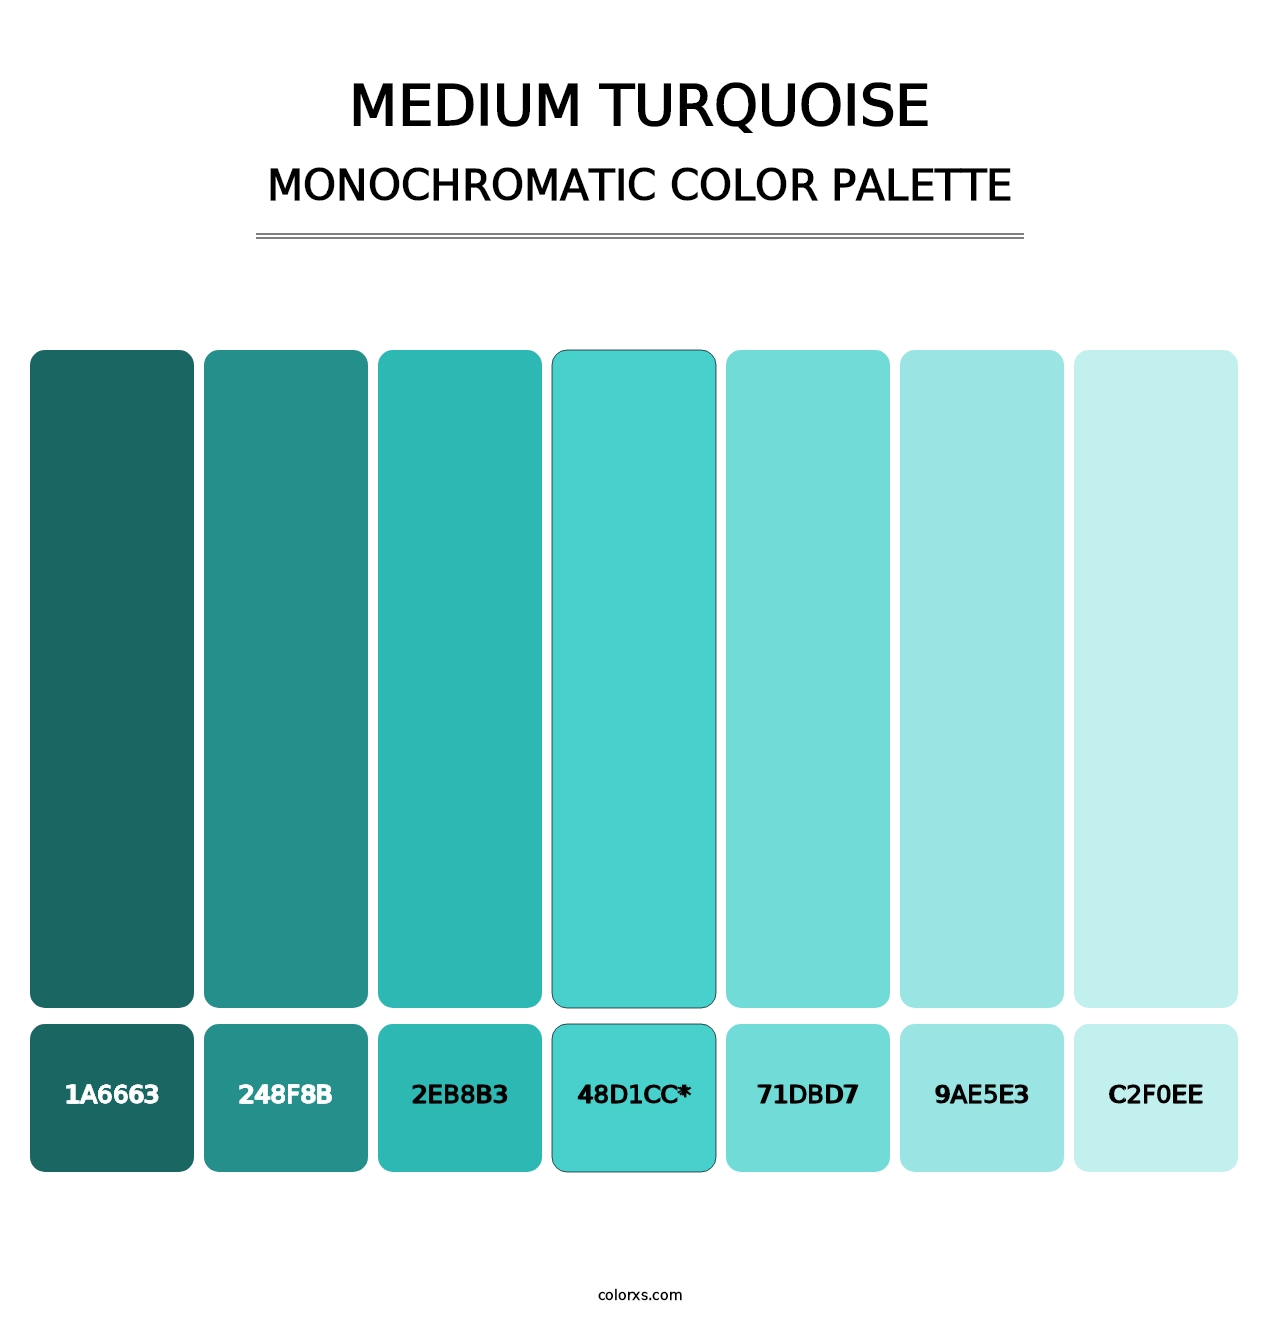 Medium Turquoise - Monochromatic Color Palette